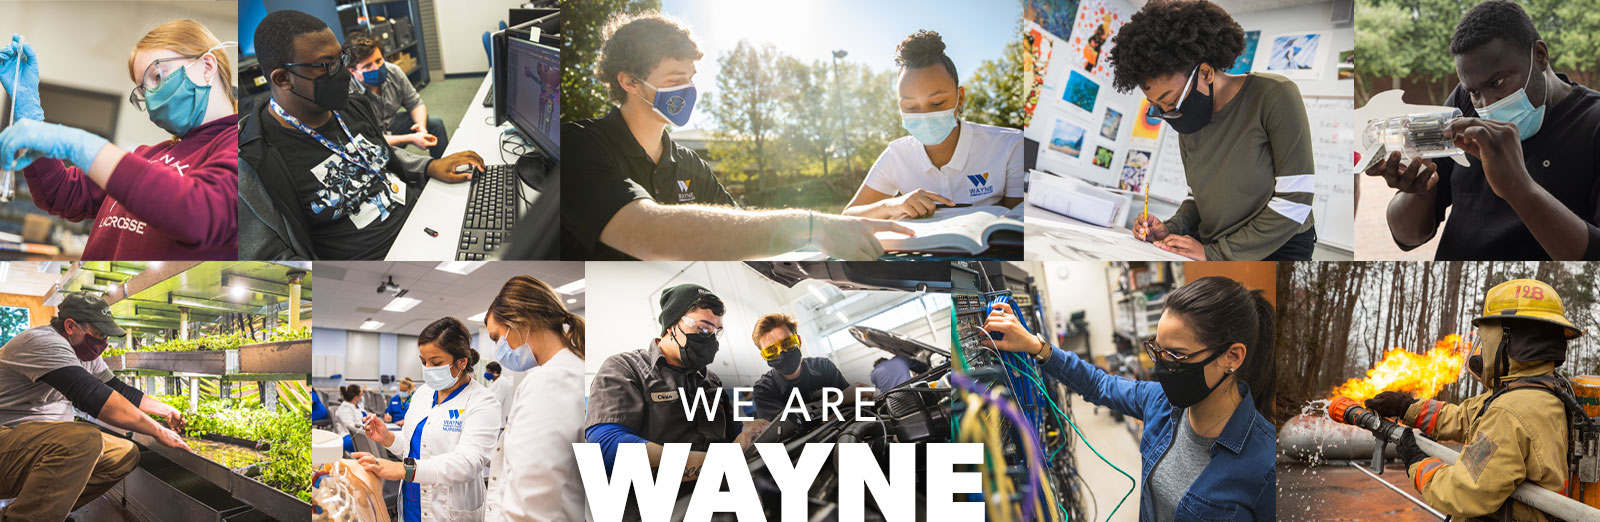 We Are Wayne banner image.